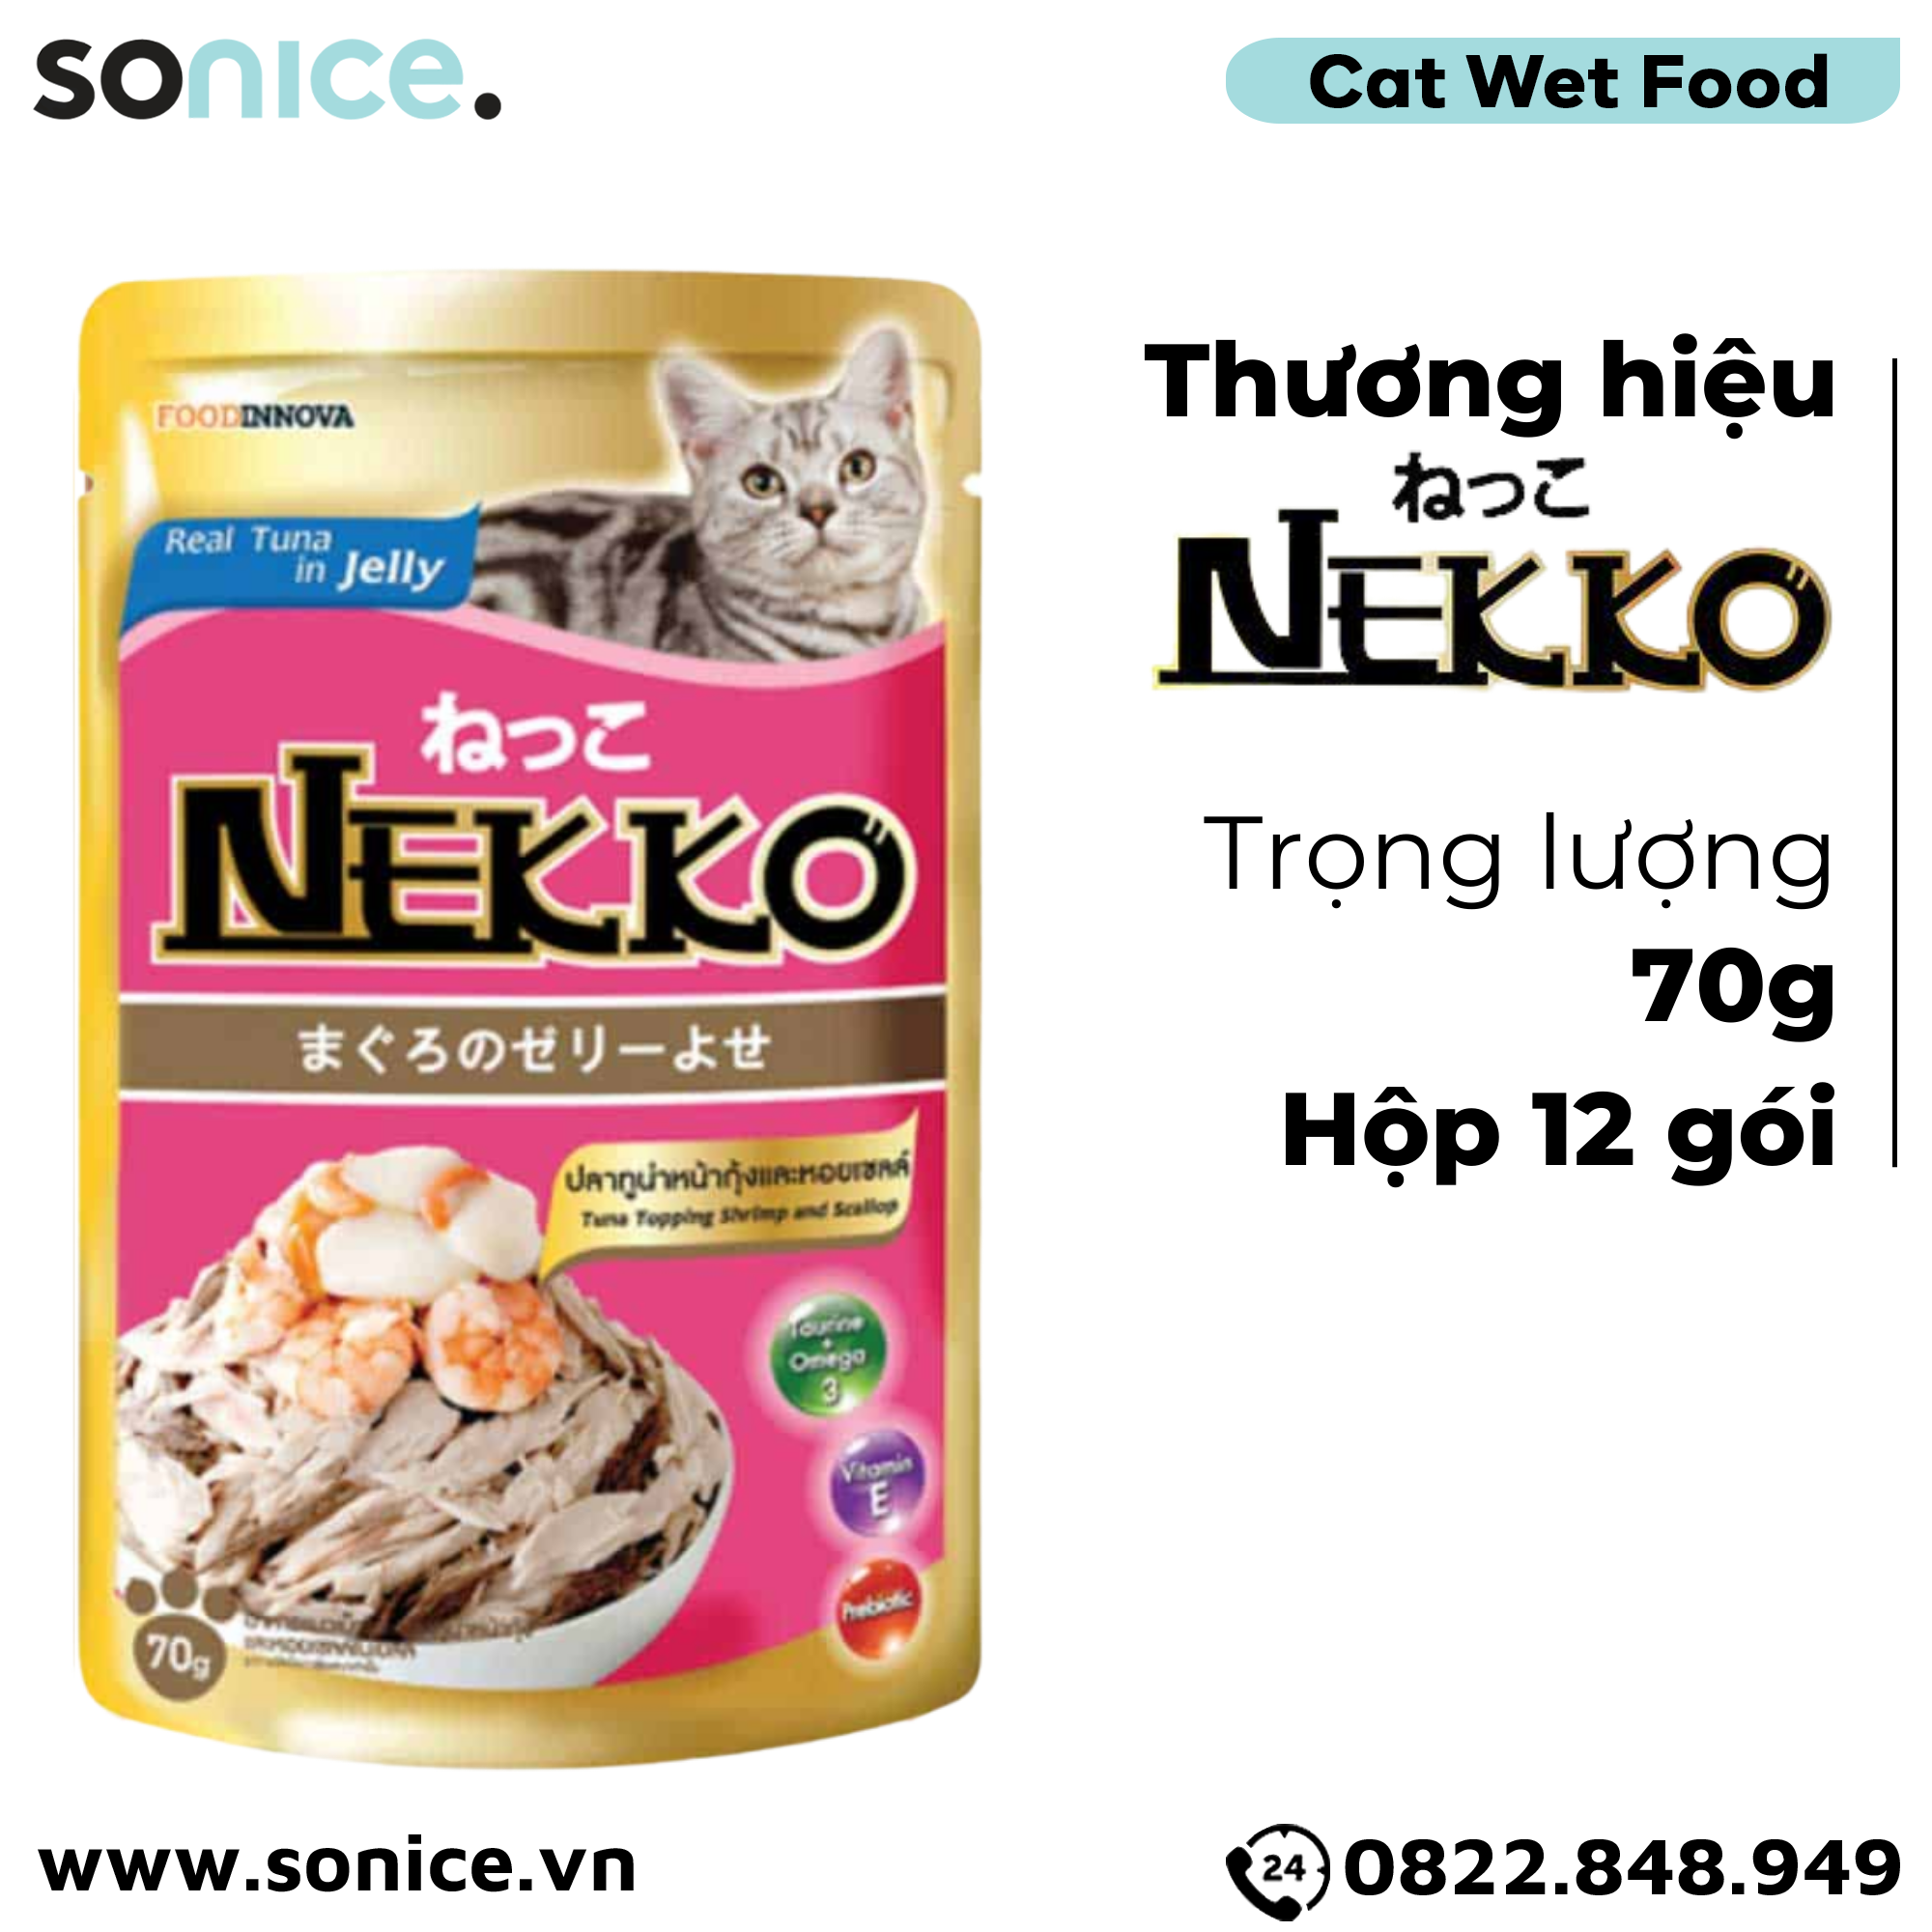  Pate mèo NEKKO Cá Ngừ & Shrimp 70g - 1 hộp 12 gói SONICE. 